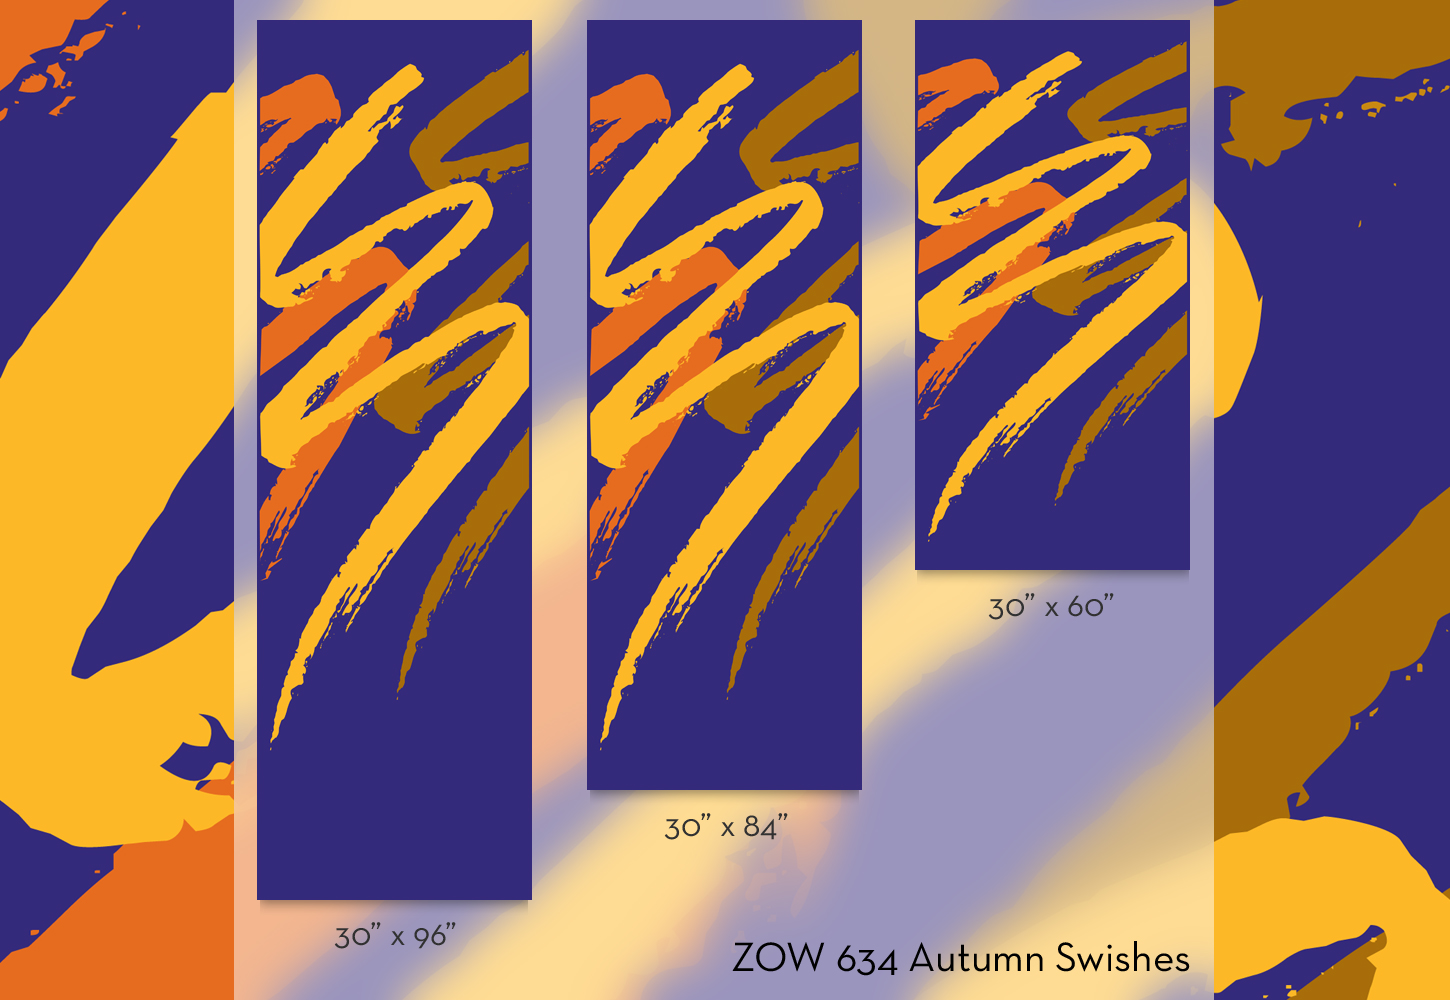 ZOW 634 Autumn Swishes